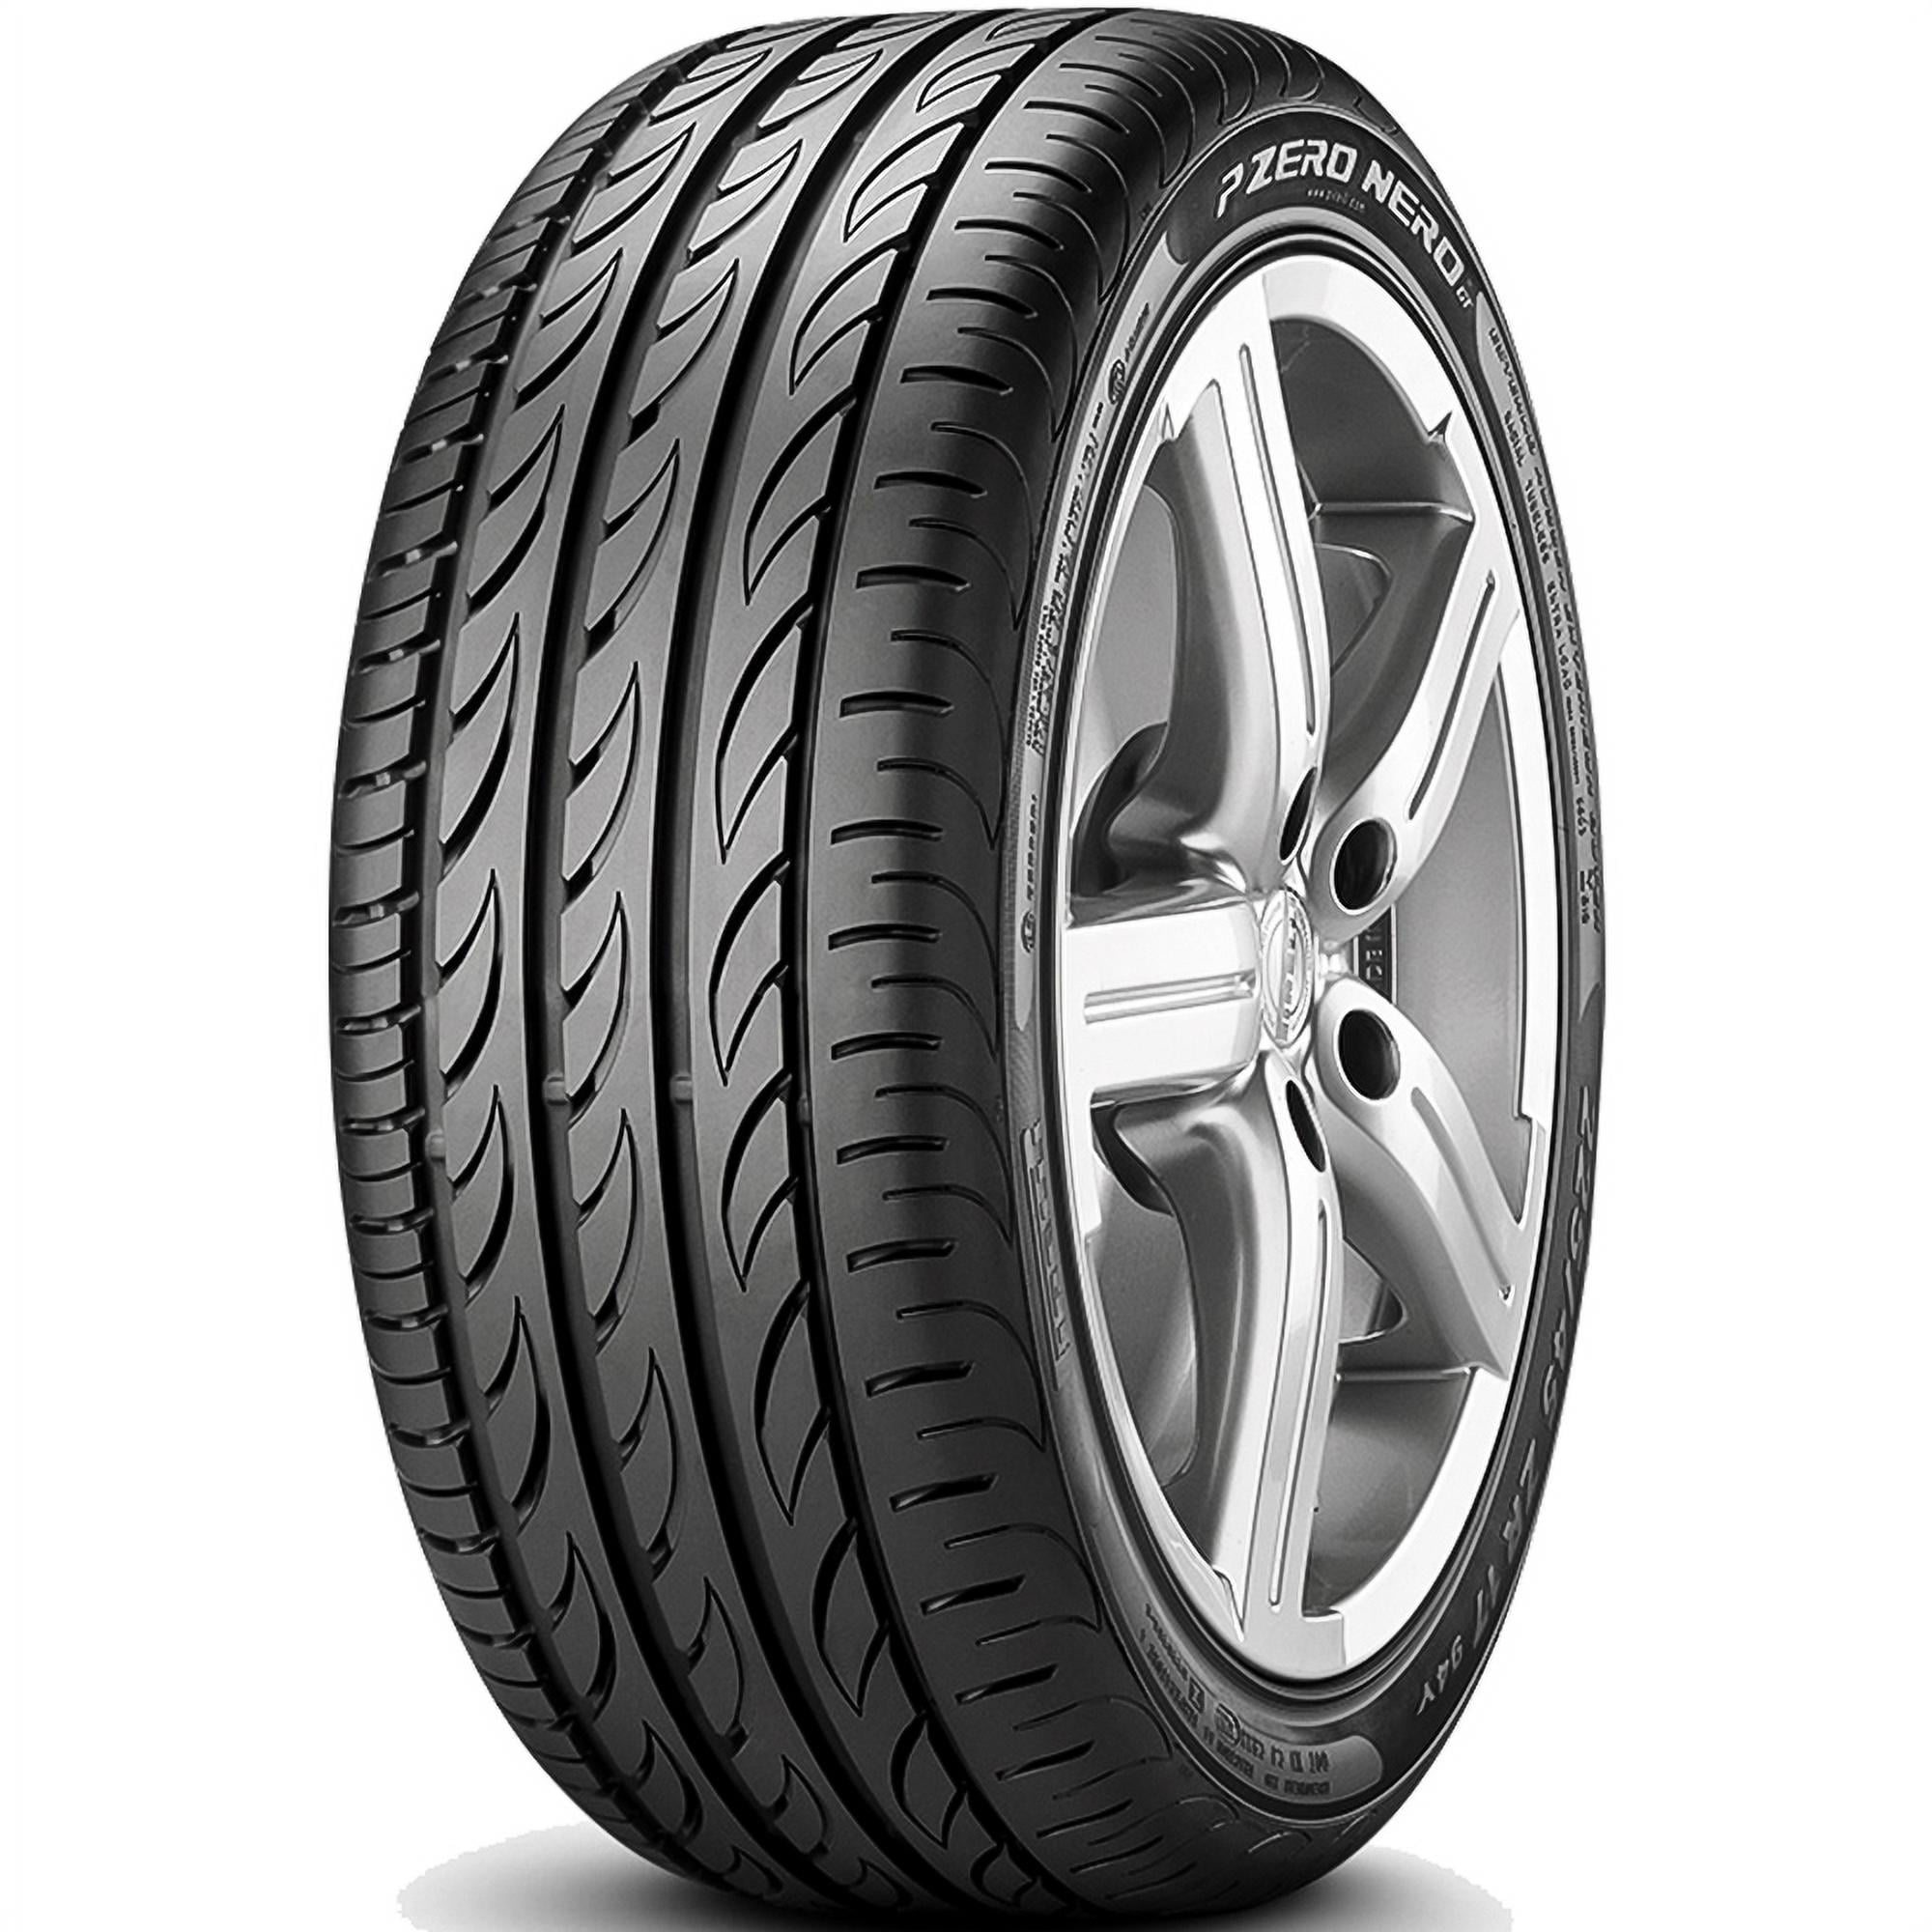 Engineers Fearless Wafer Pirelli P Zero Nero GT 235/45R18 98 Y Tire - Walmart.com